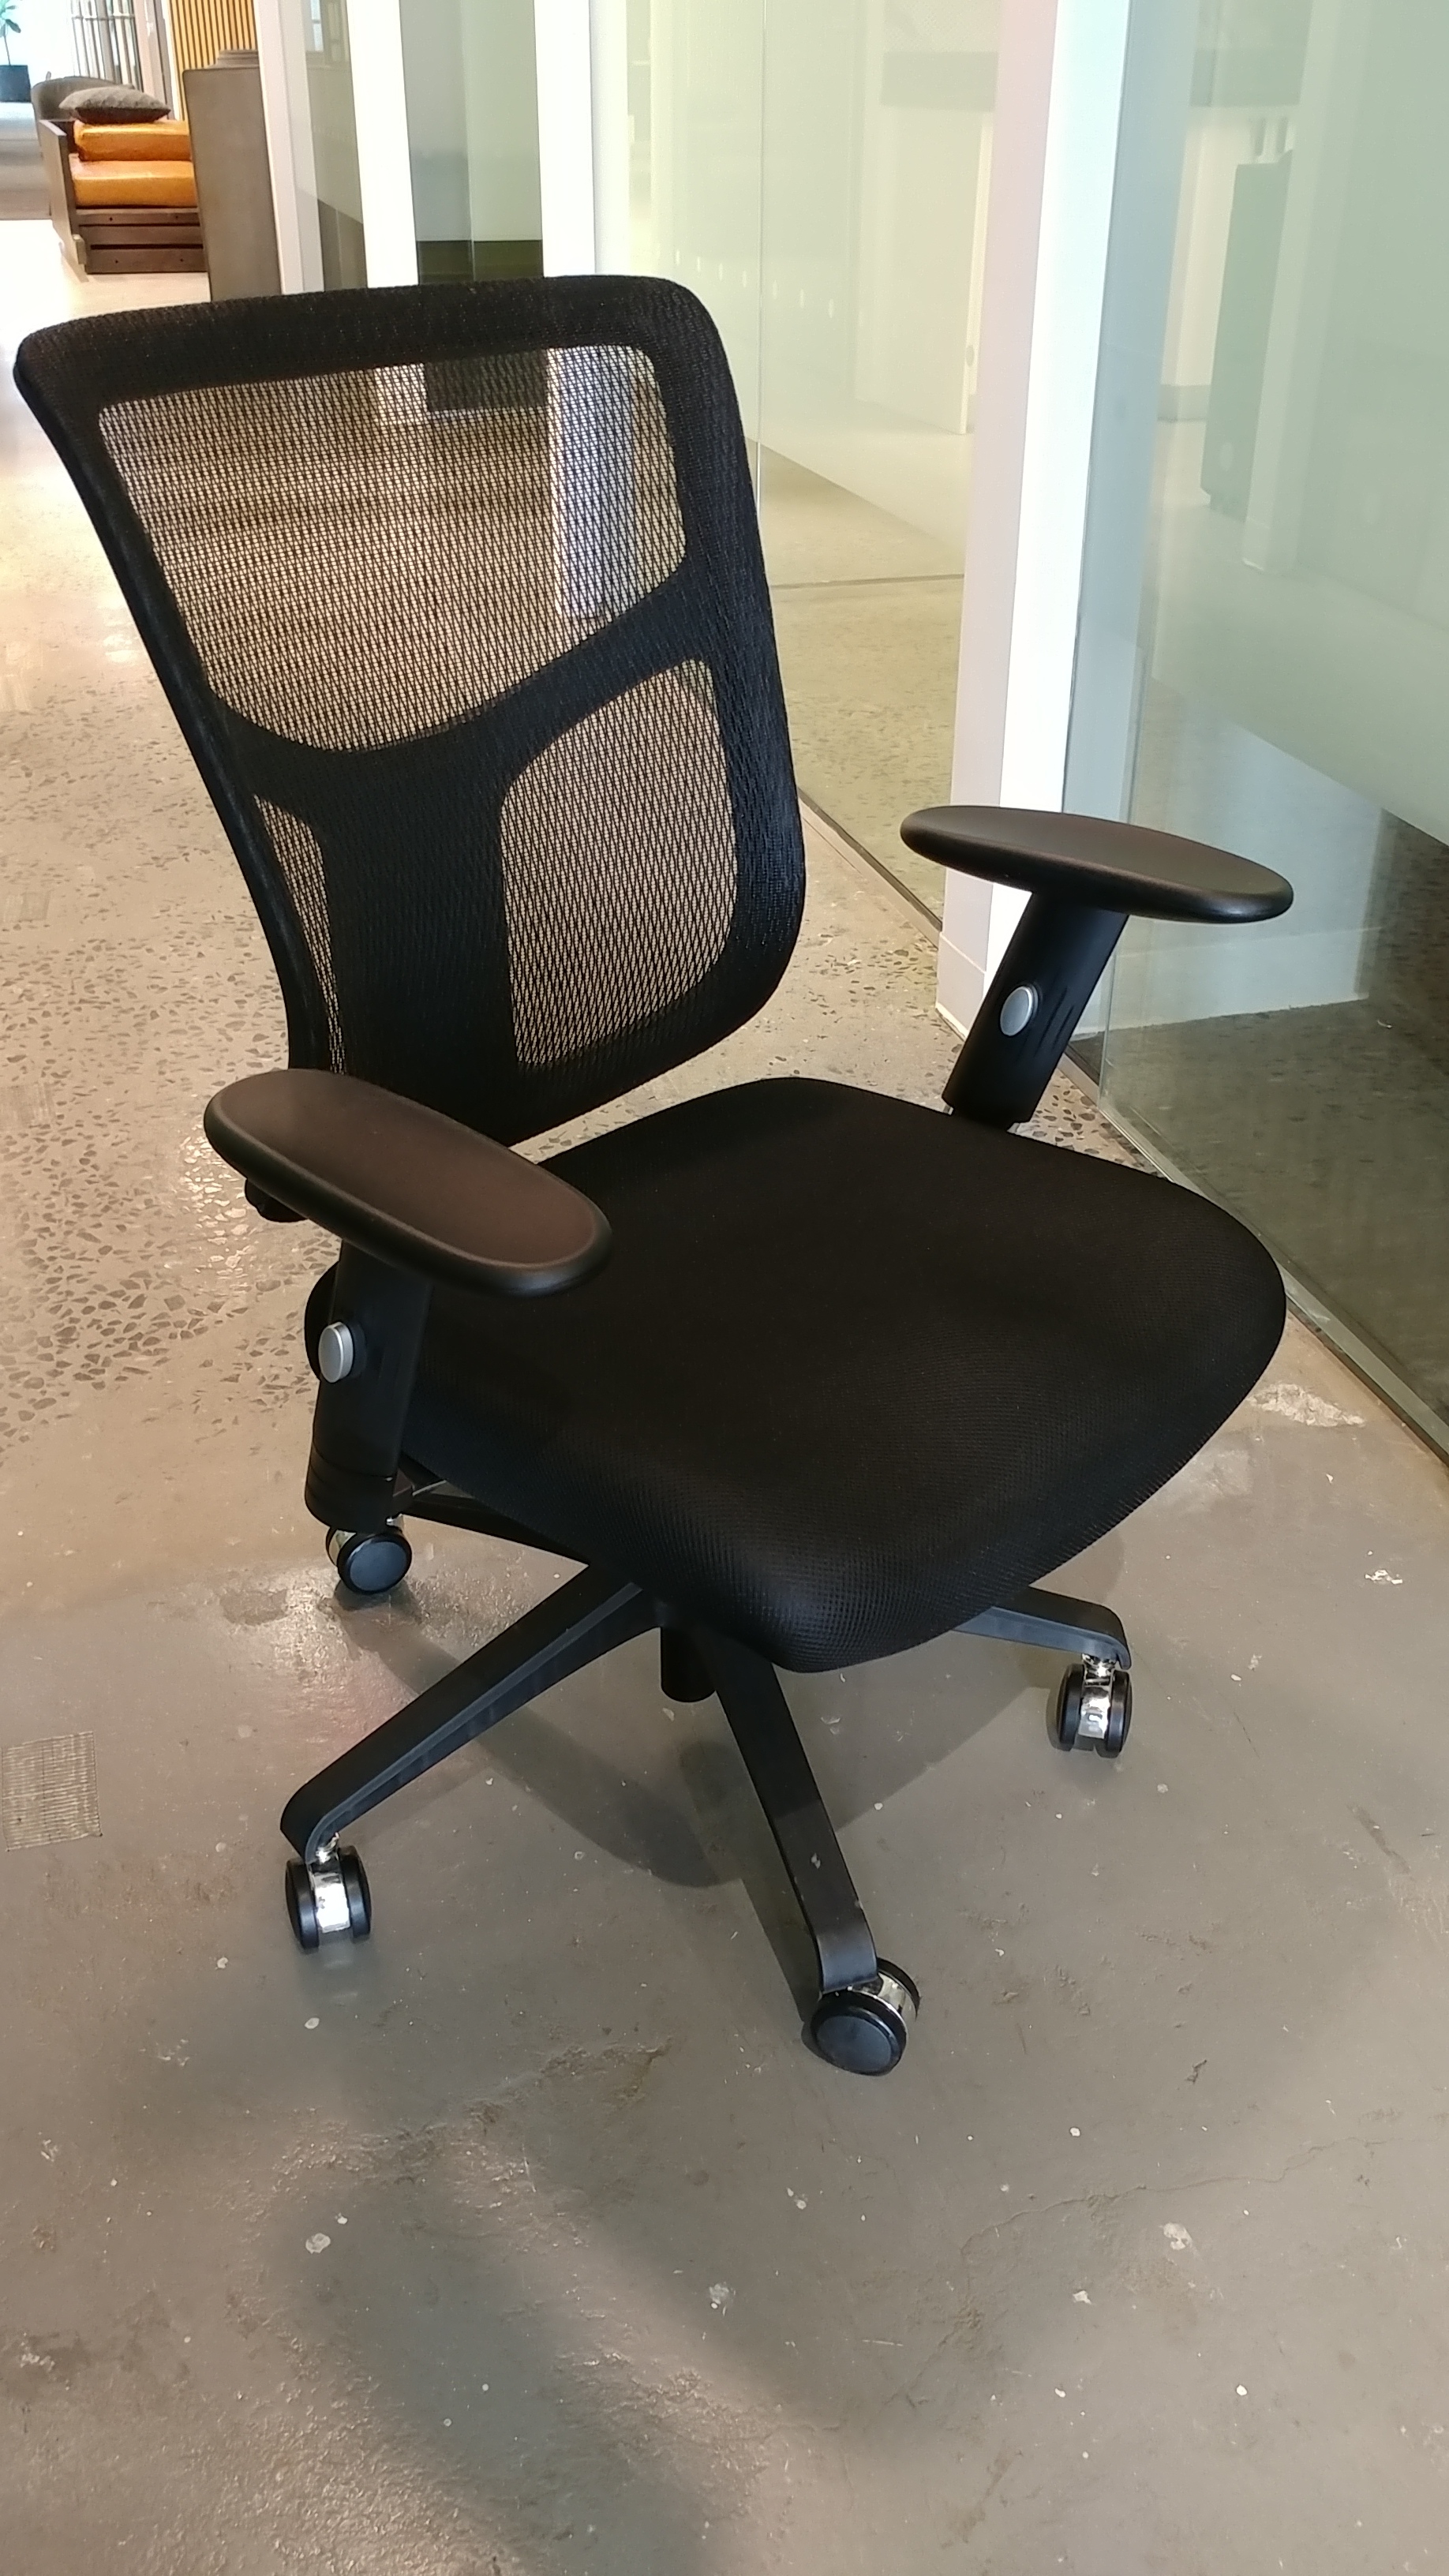 https://www.cubicles.com/uploads/light-box/67/LargeImage/used-desk-mesh-chairs-081120-cub1-1.jpg